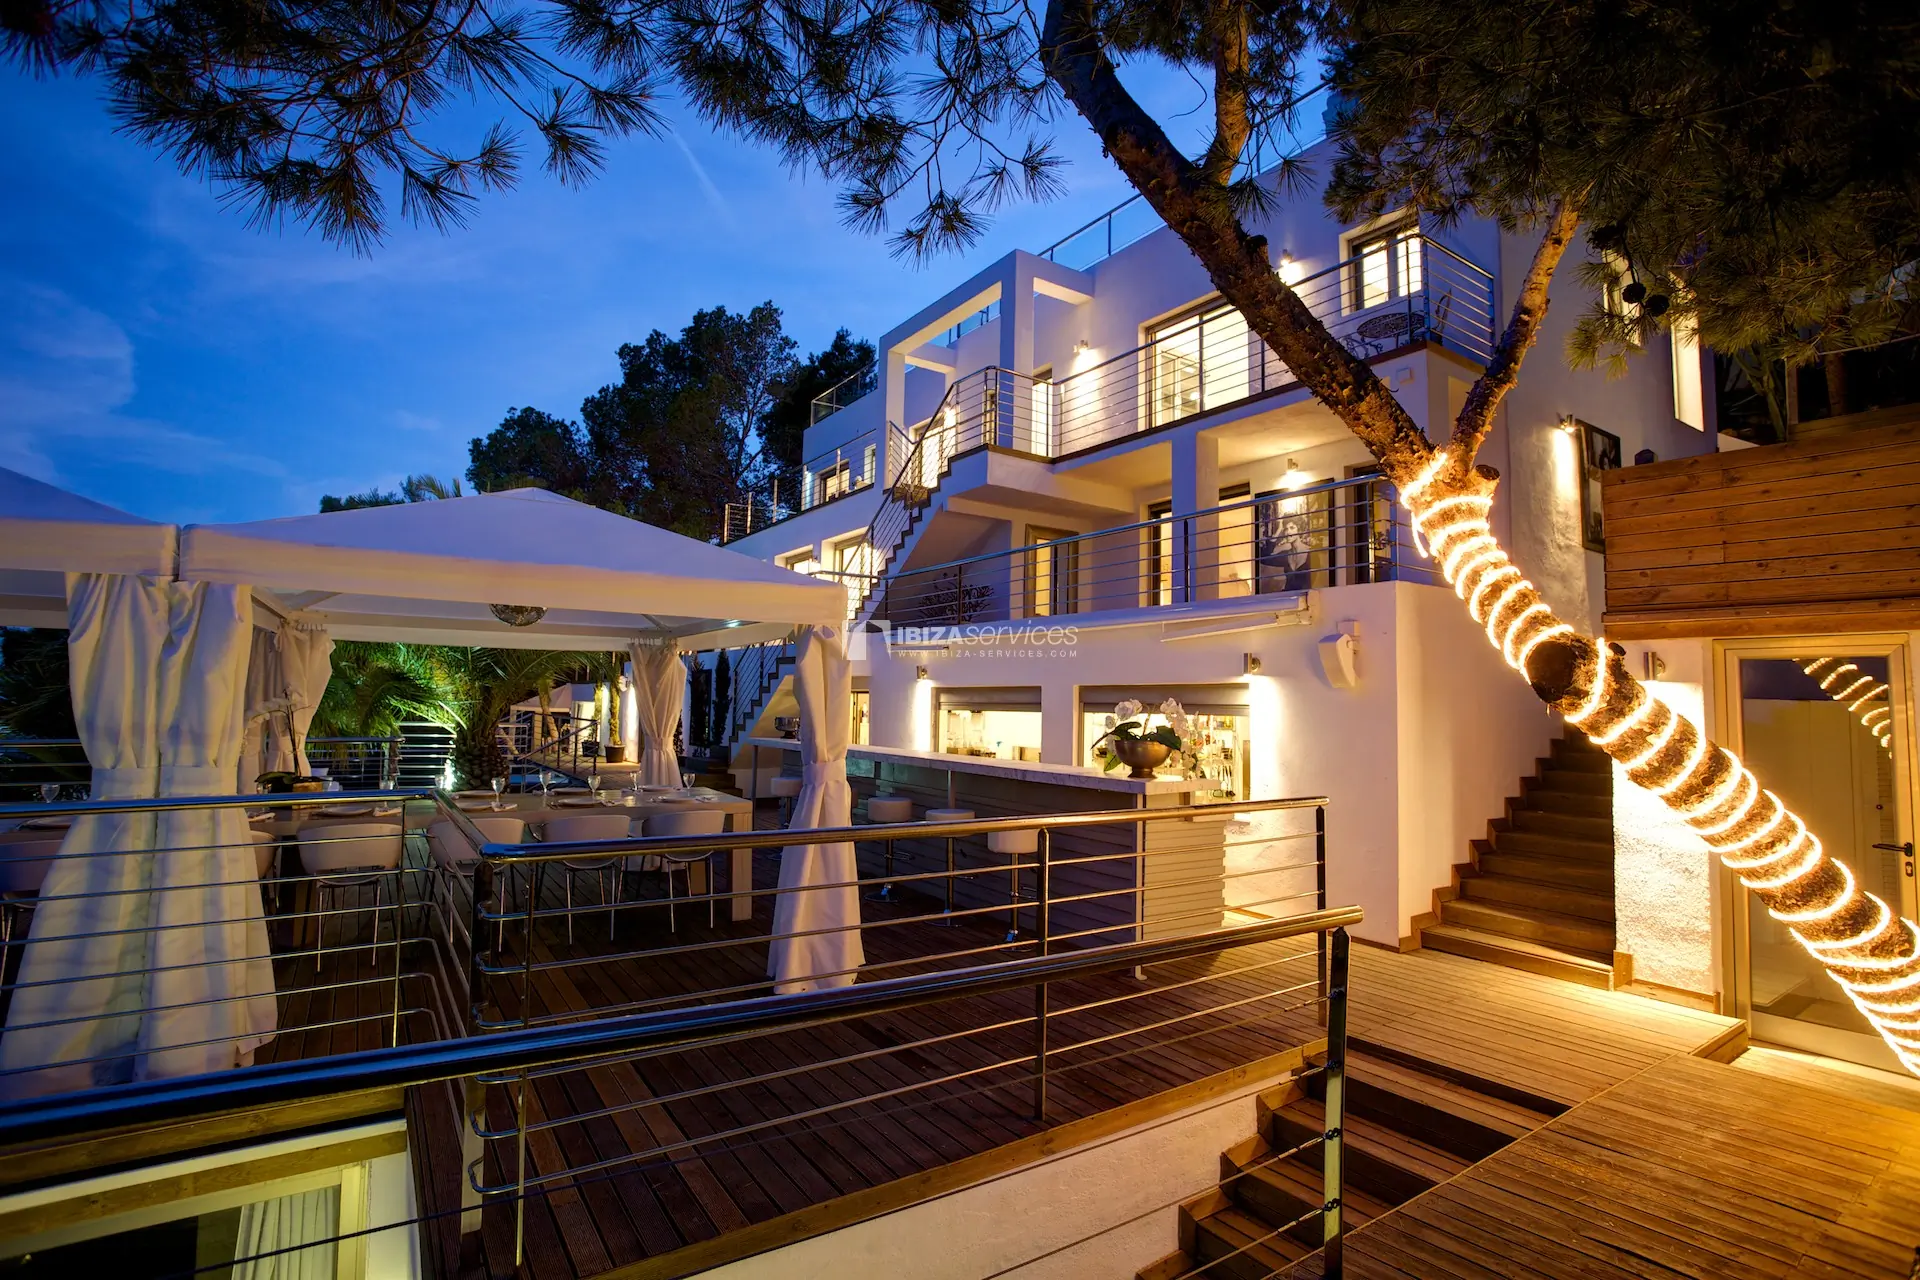 Luxueuse villa de 9 chambres à louer proche de Ibiza